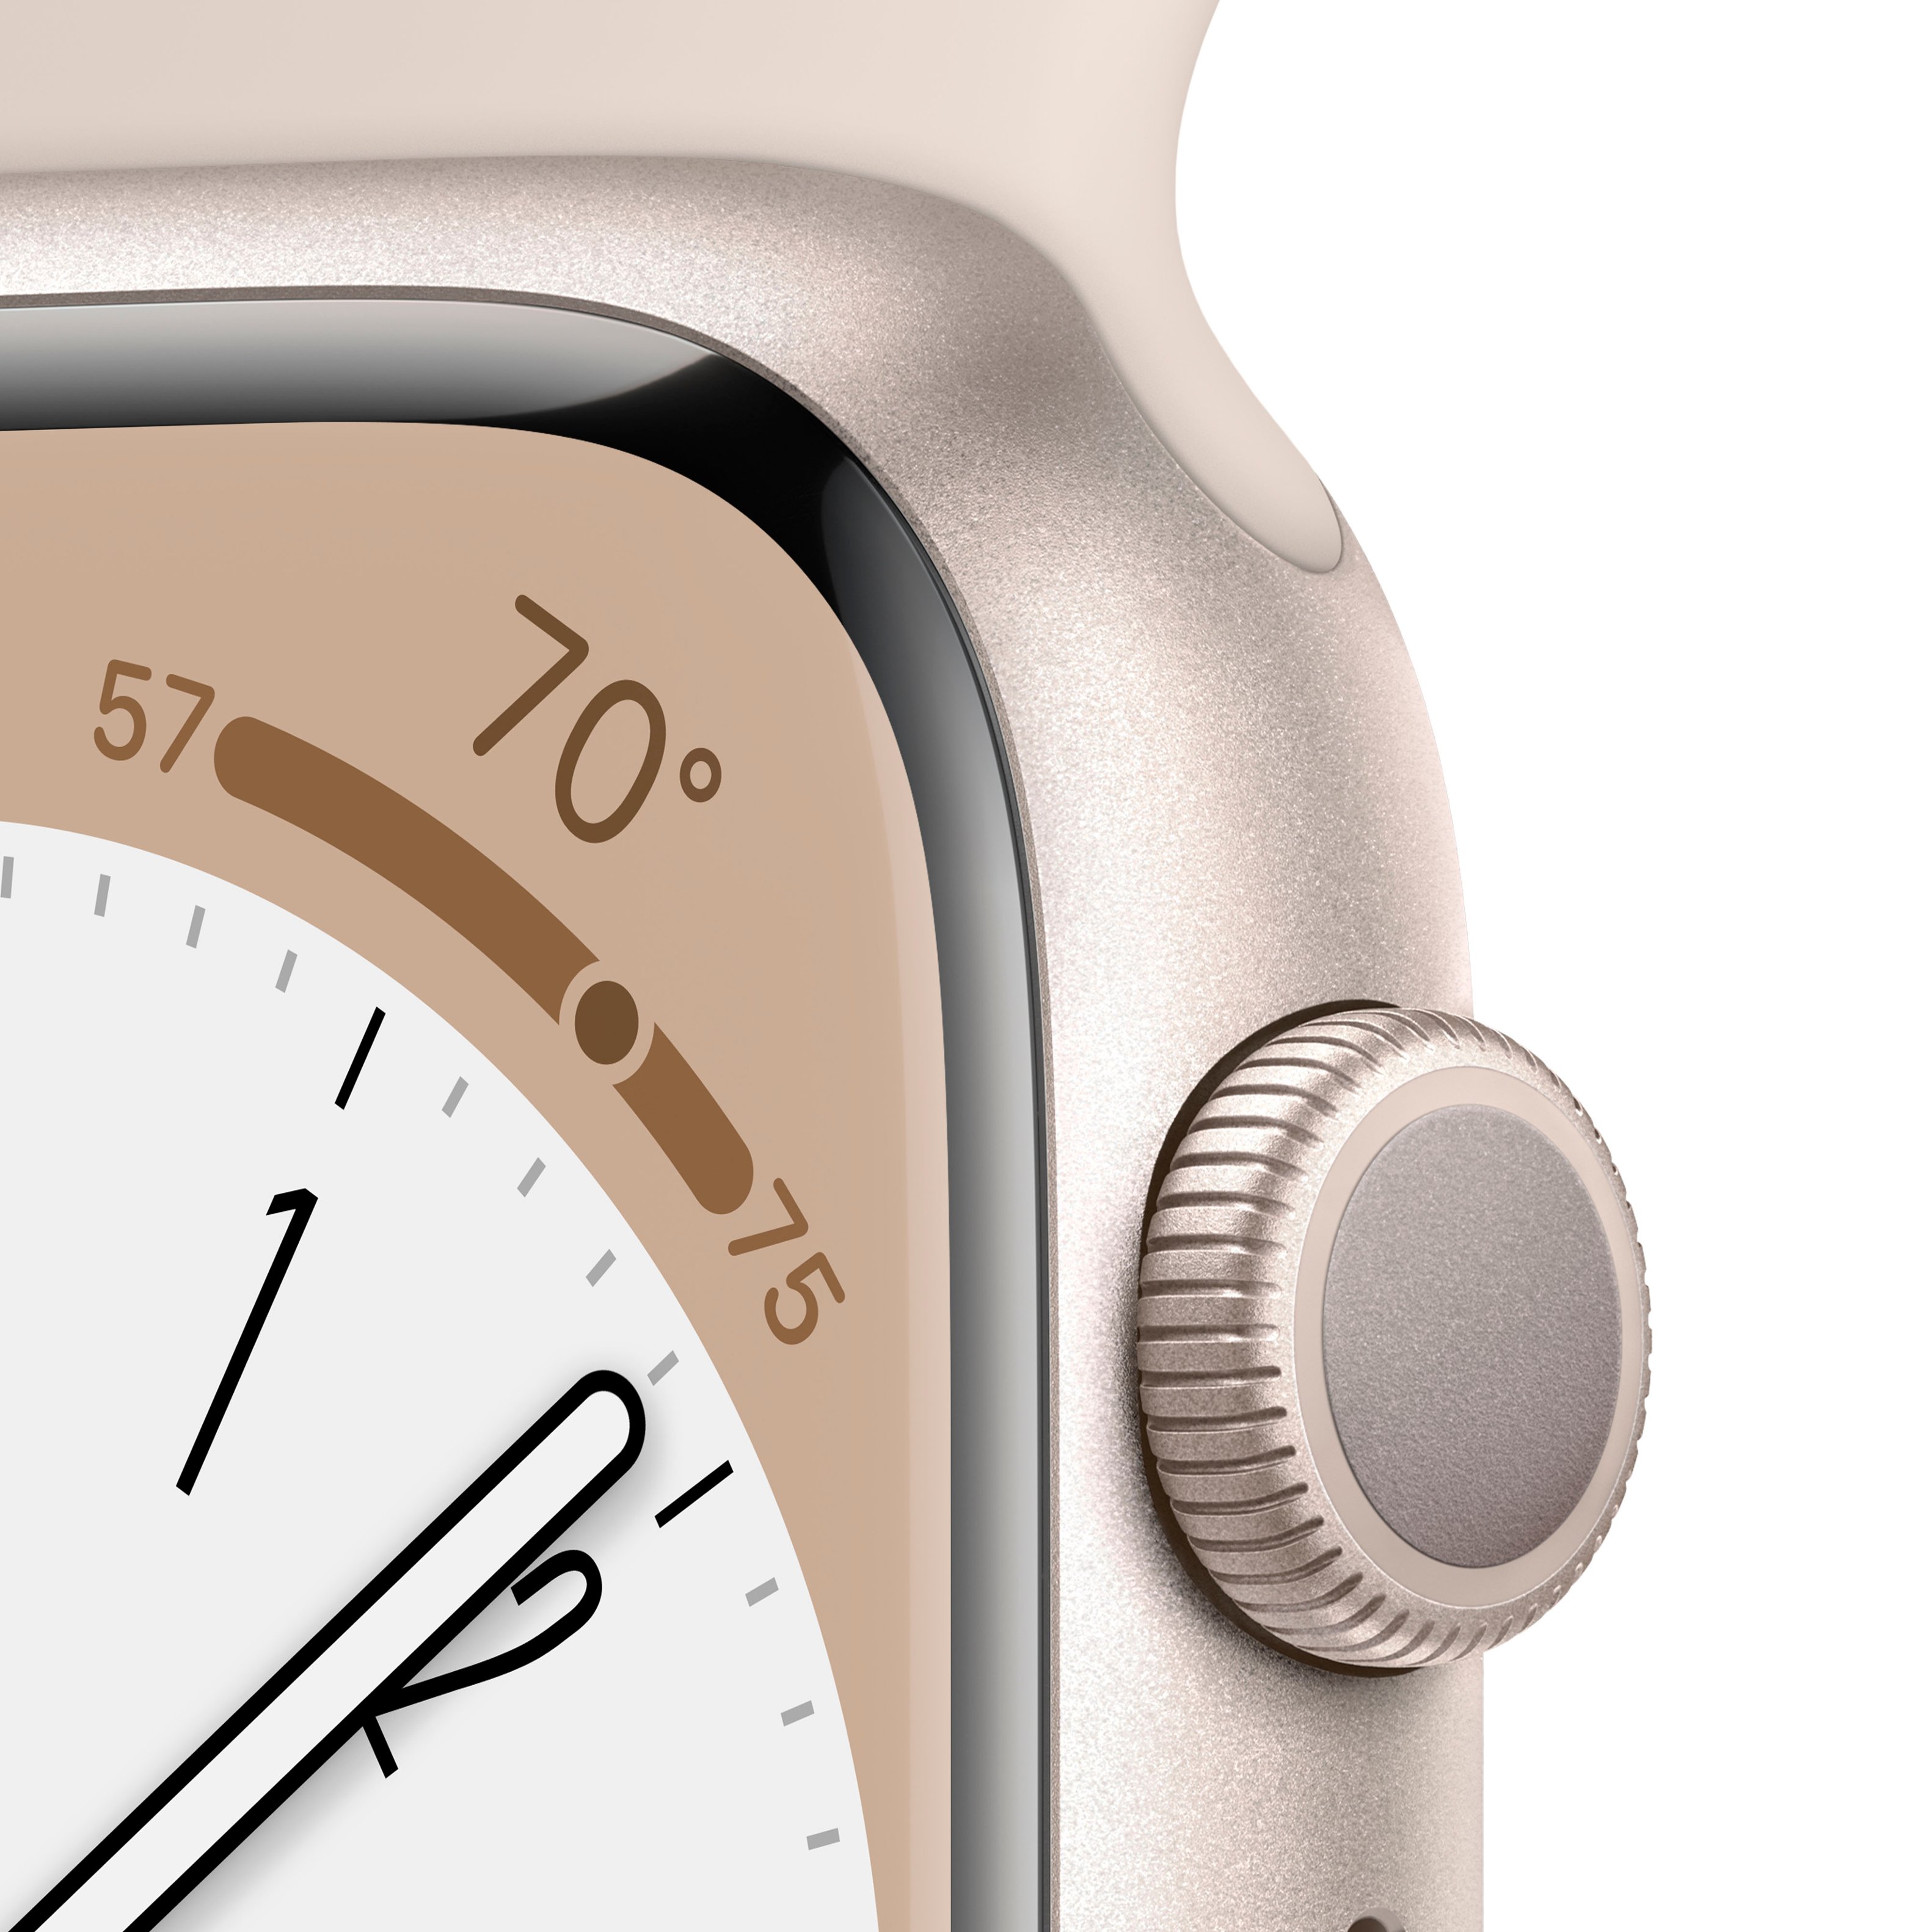 Best Buy: Apple Watch Series 8 (GPS) 41mm Aluminum Case with 